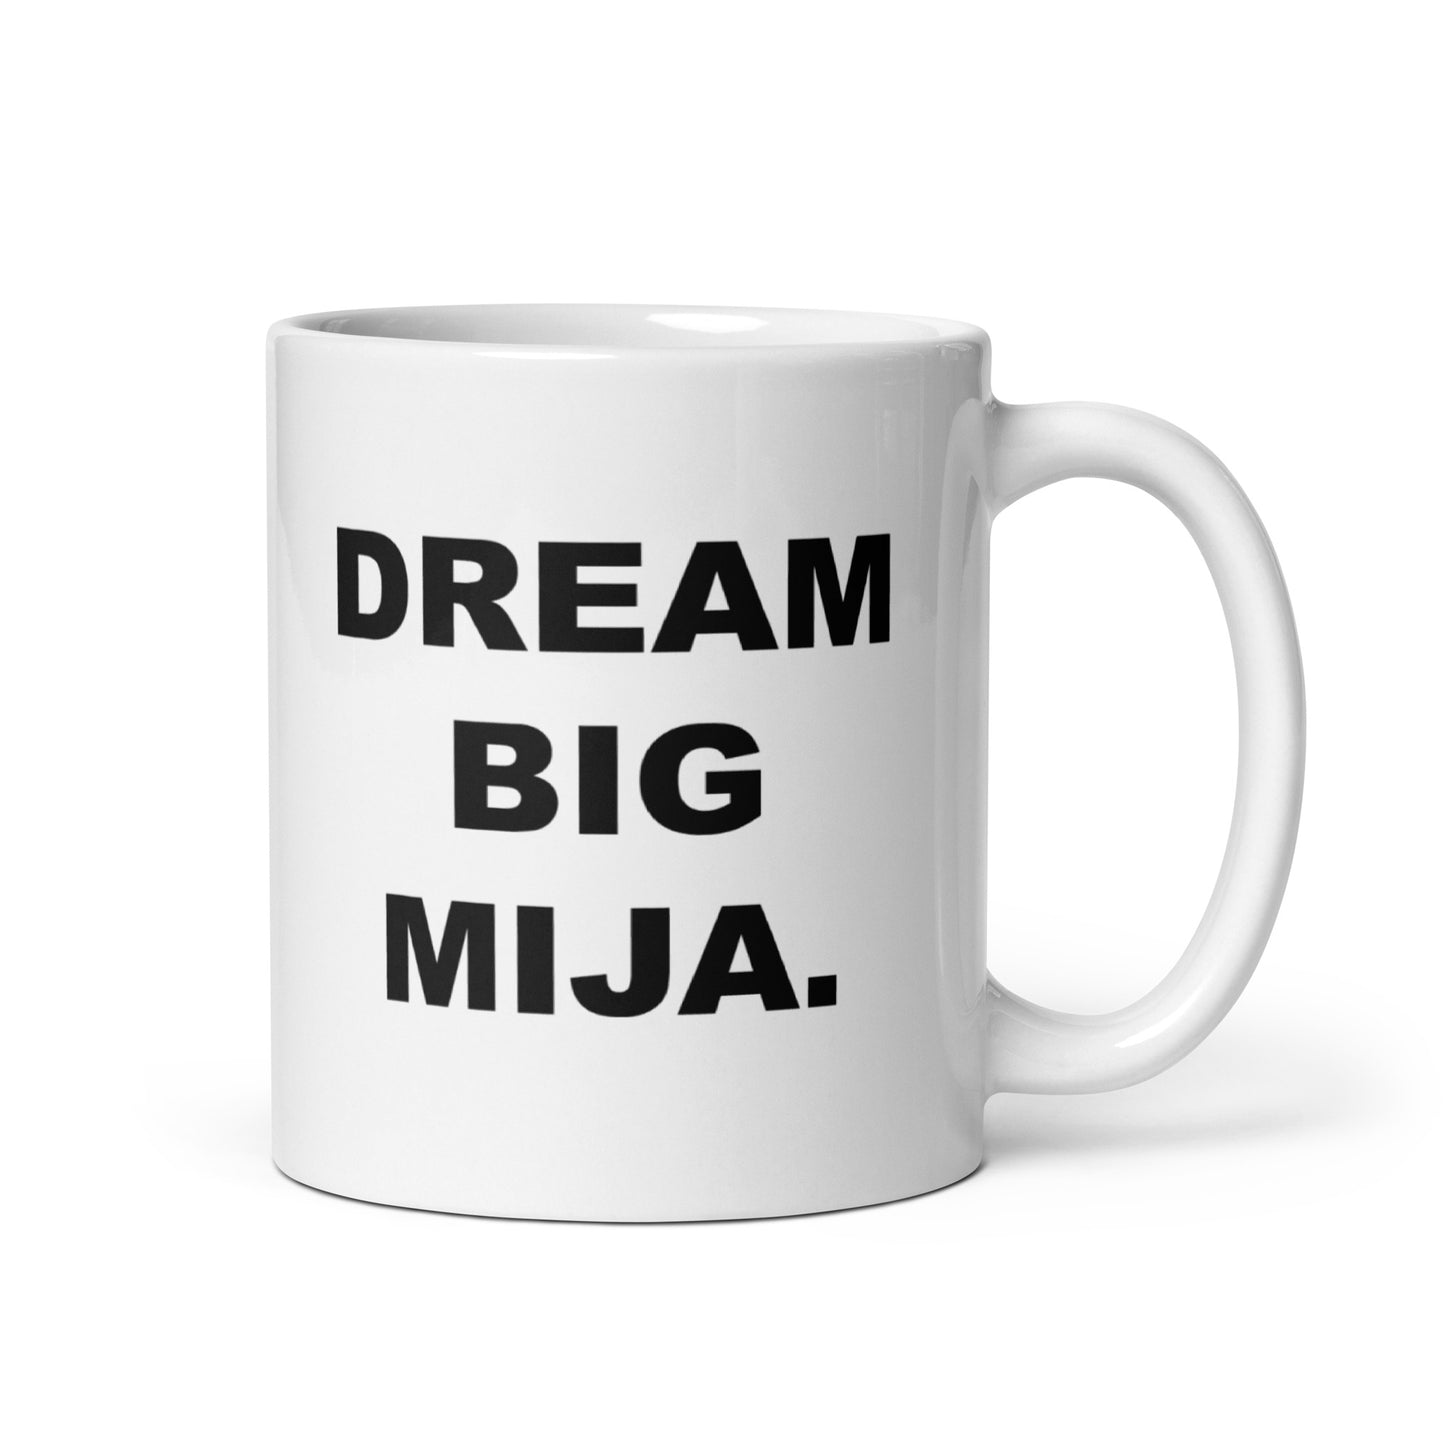 Dream Big Mija Taza